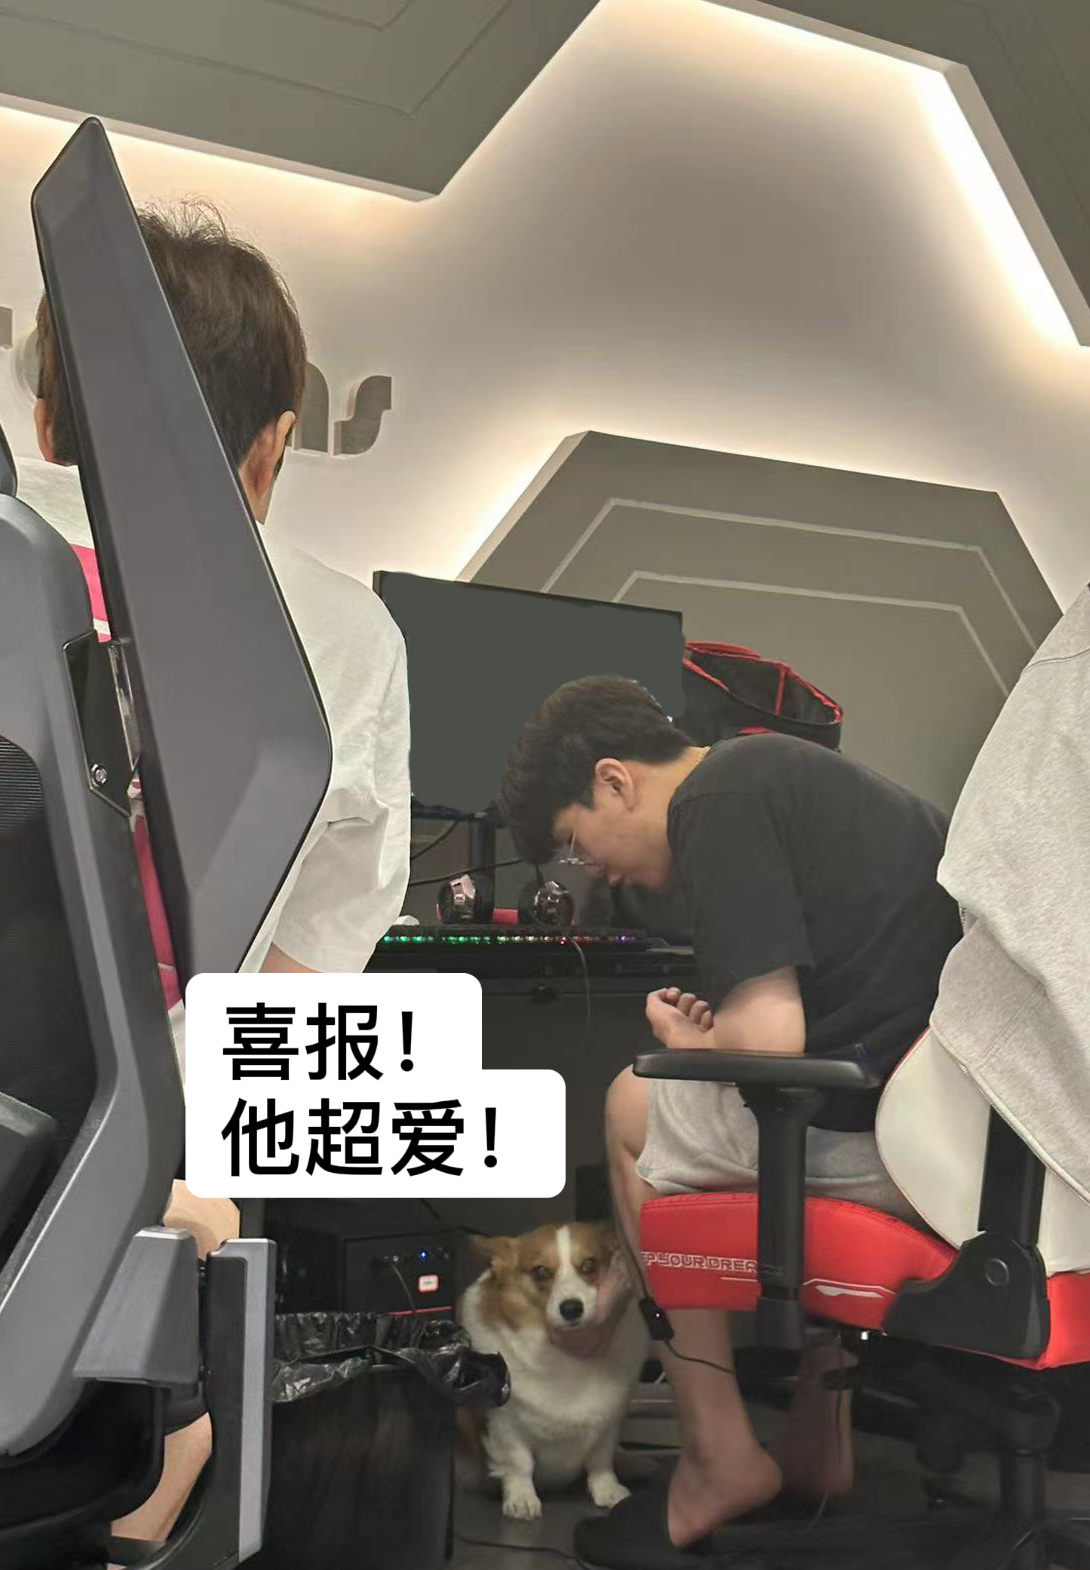 JDG工作人员分享照片：Ruler在WE俱乐部撸狗，选手拍摄宣传片花絮等